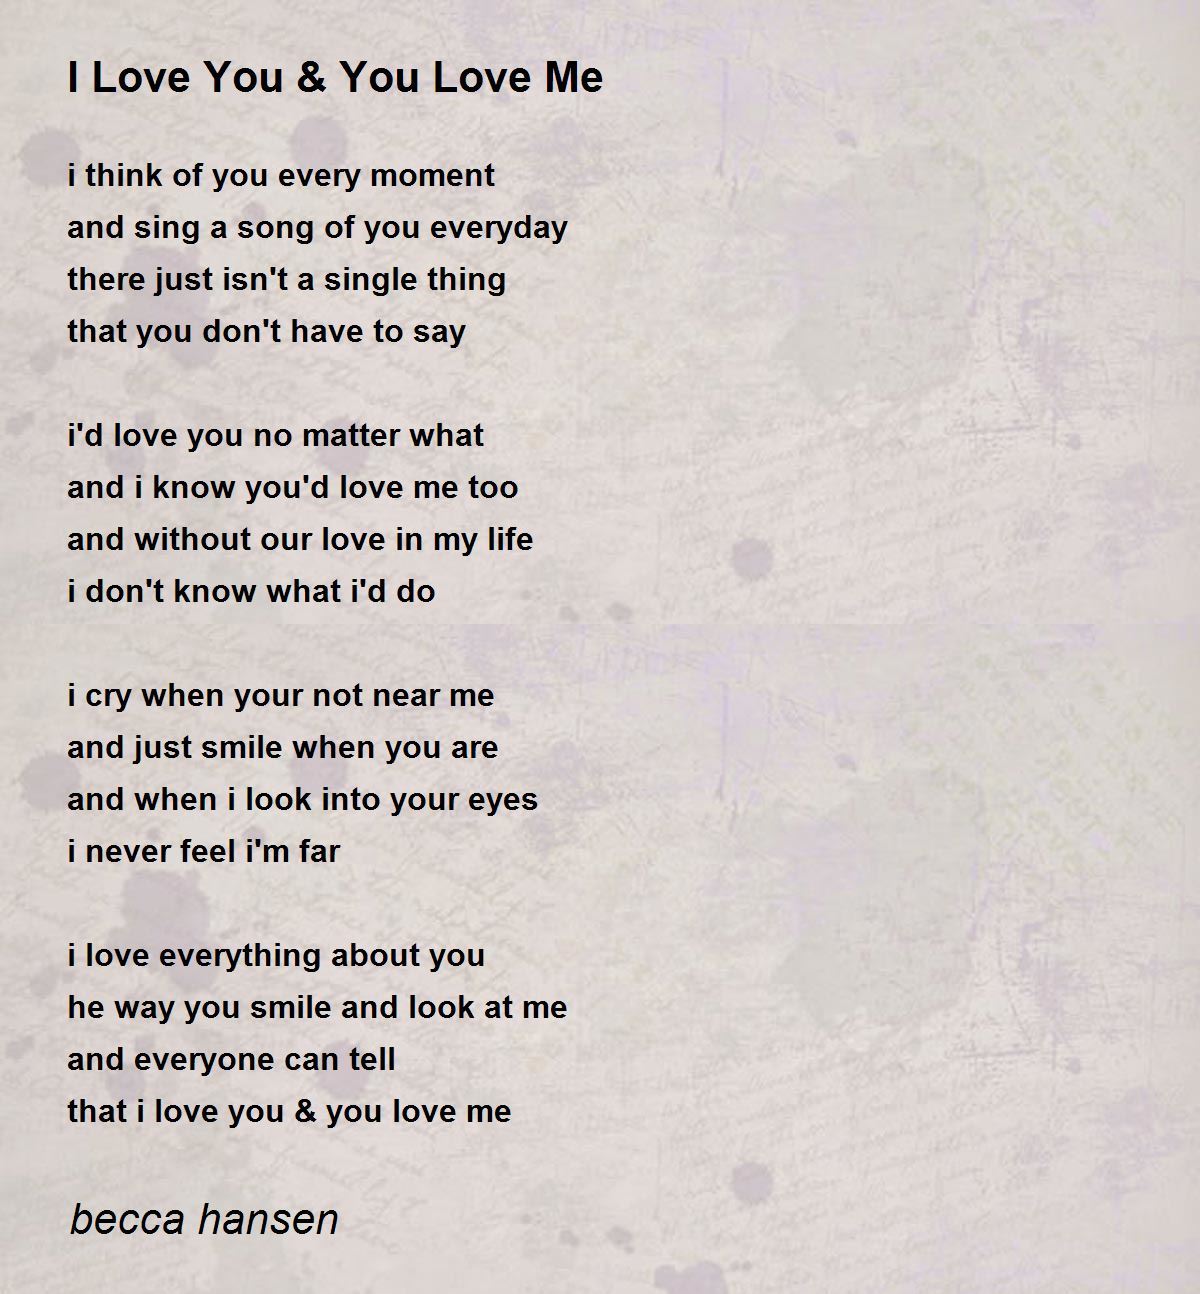 I Love You & You Love Me - I Love You & You Love Me Poem by becca